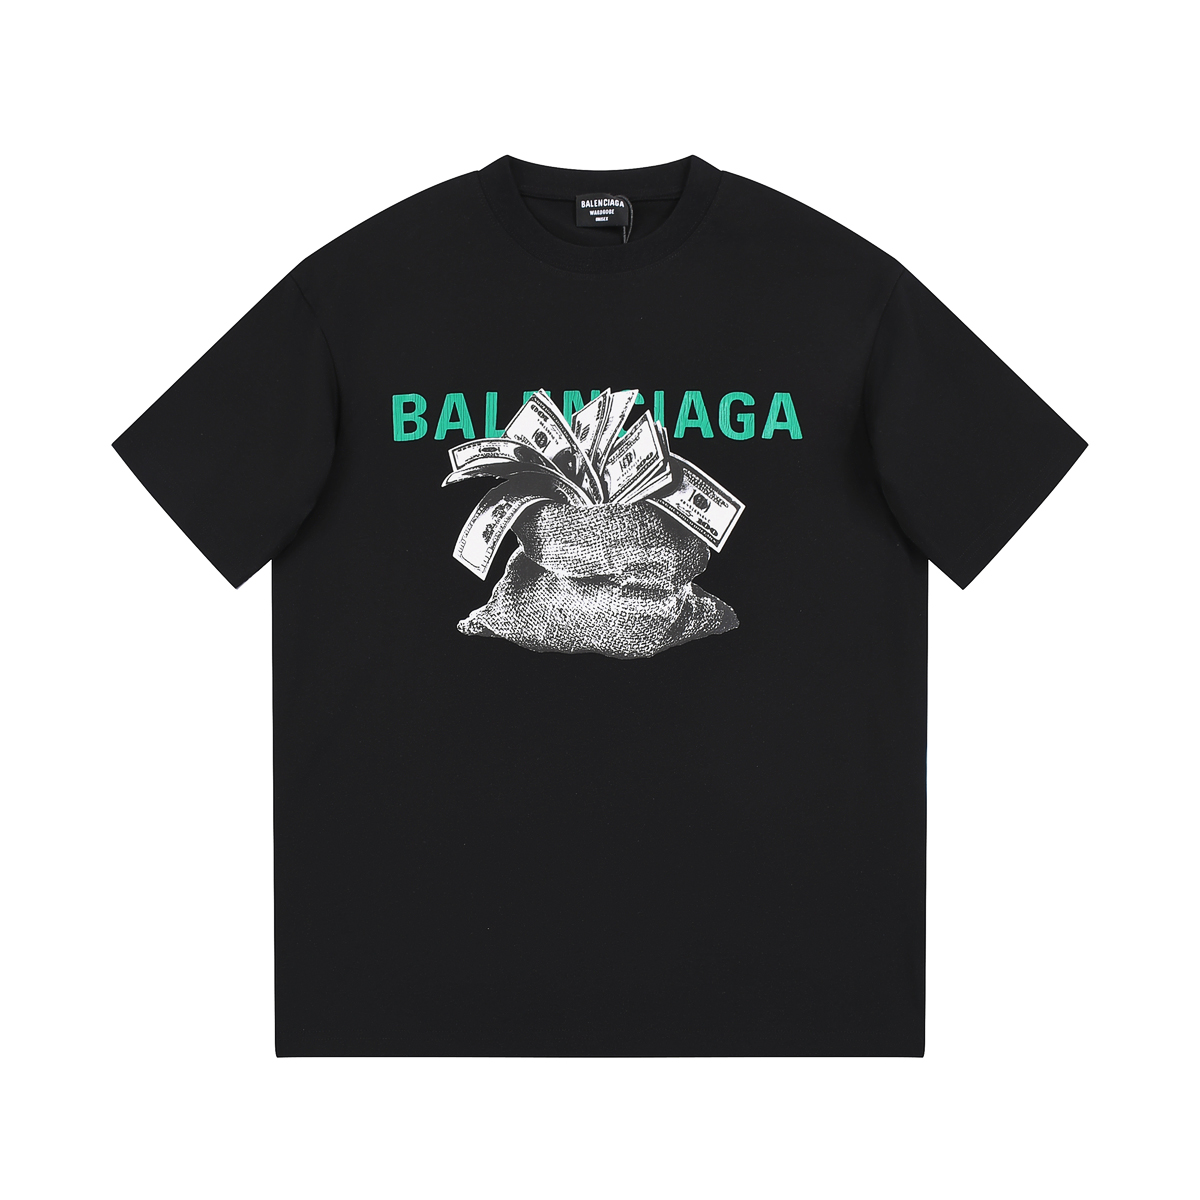 Balenciaga Summer US Dollar Printed Personality Leisure Black and White T-shirt